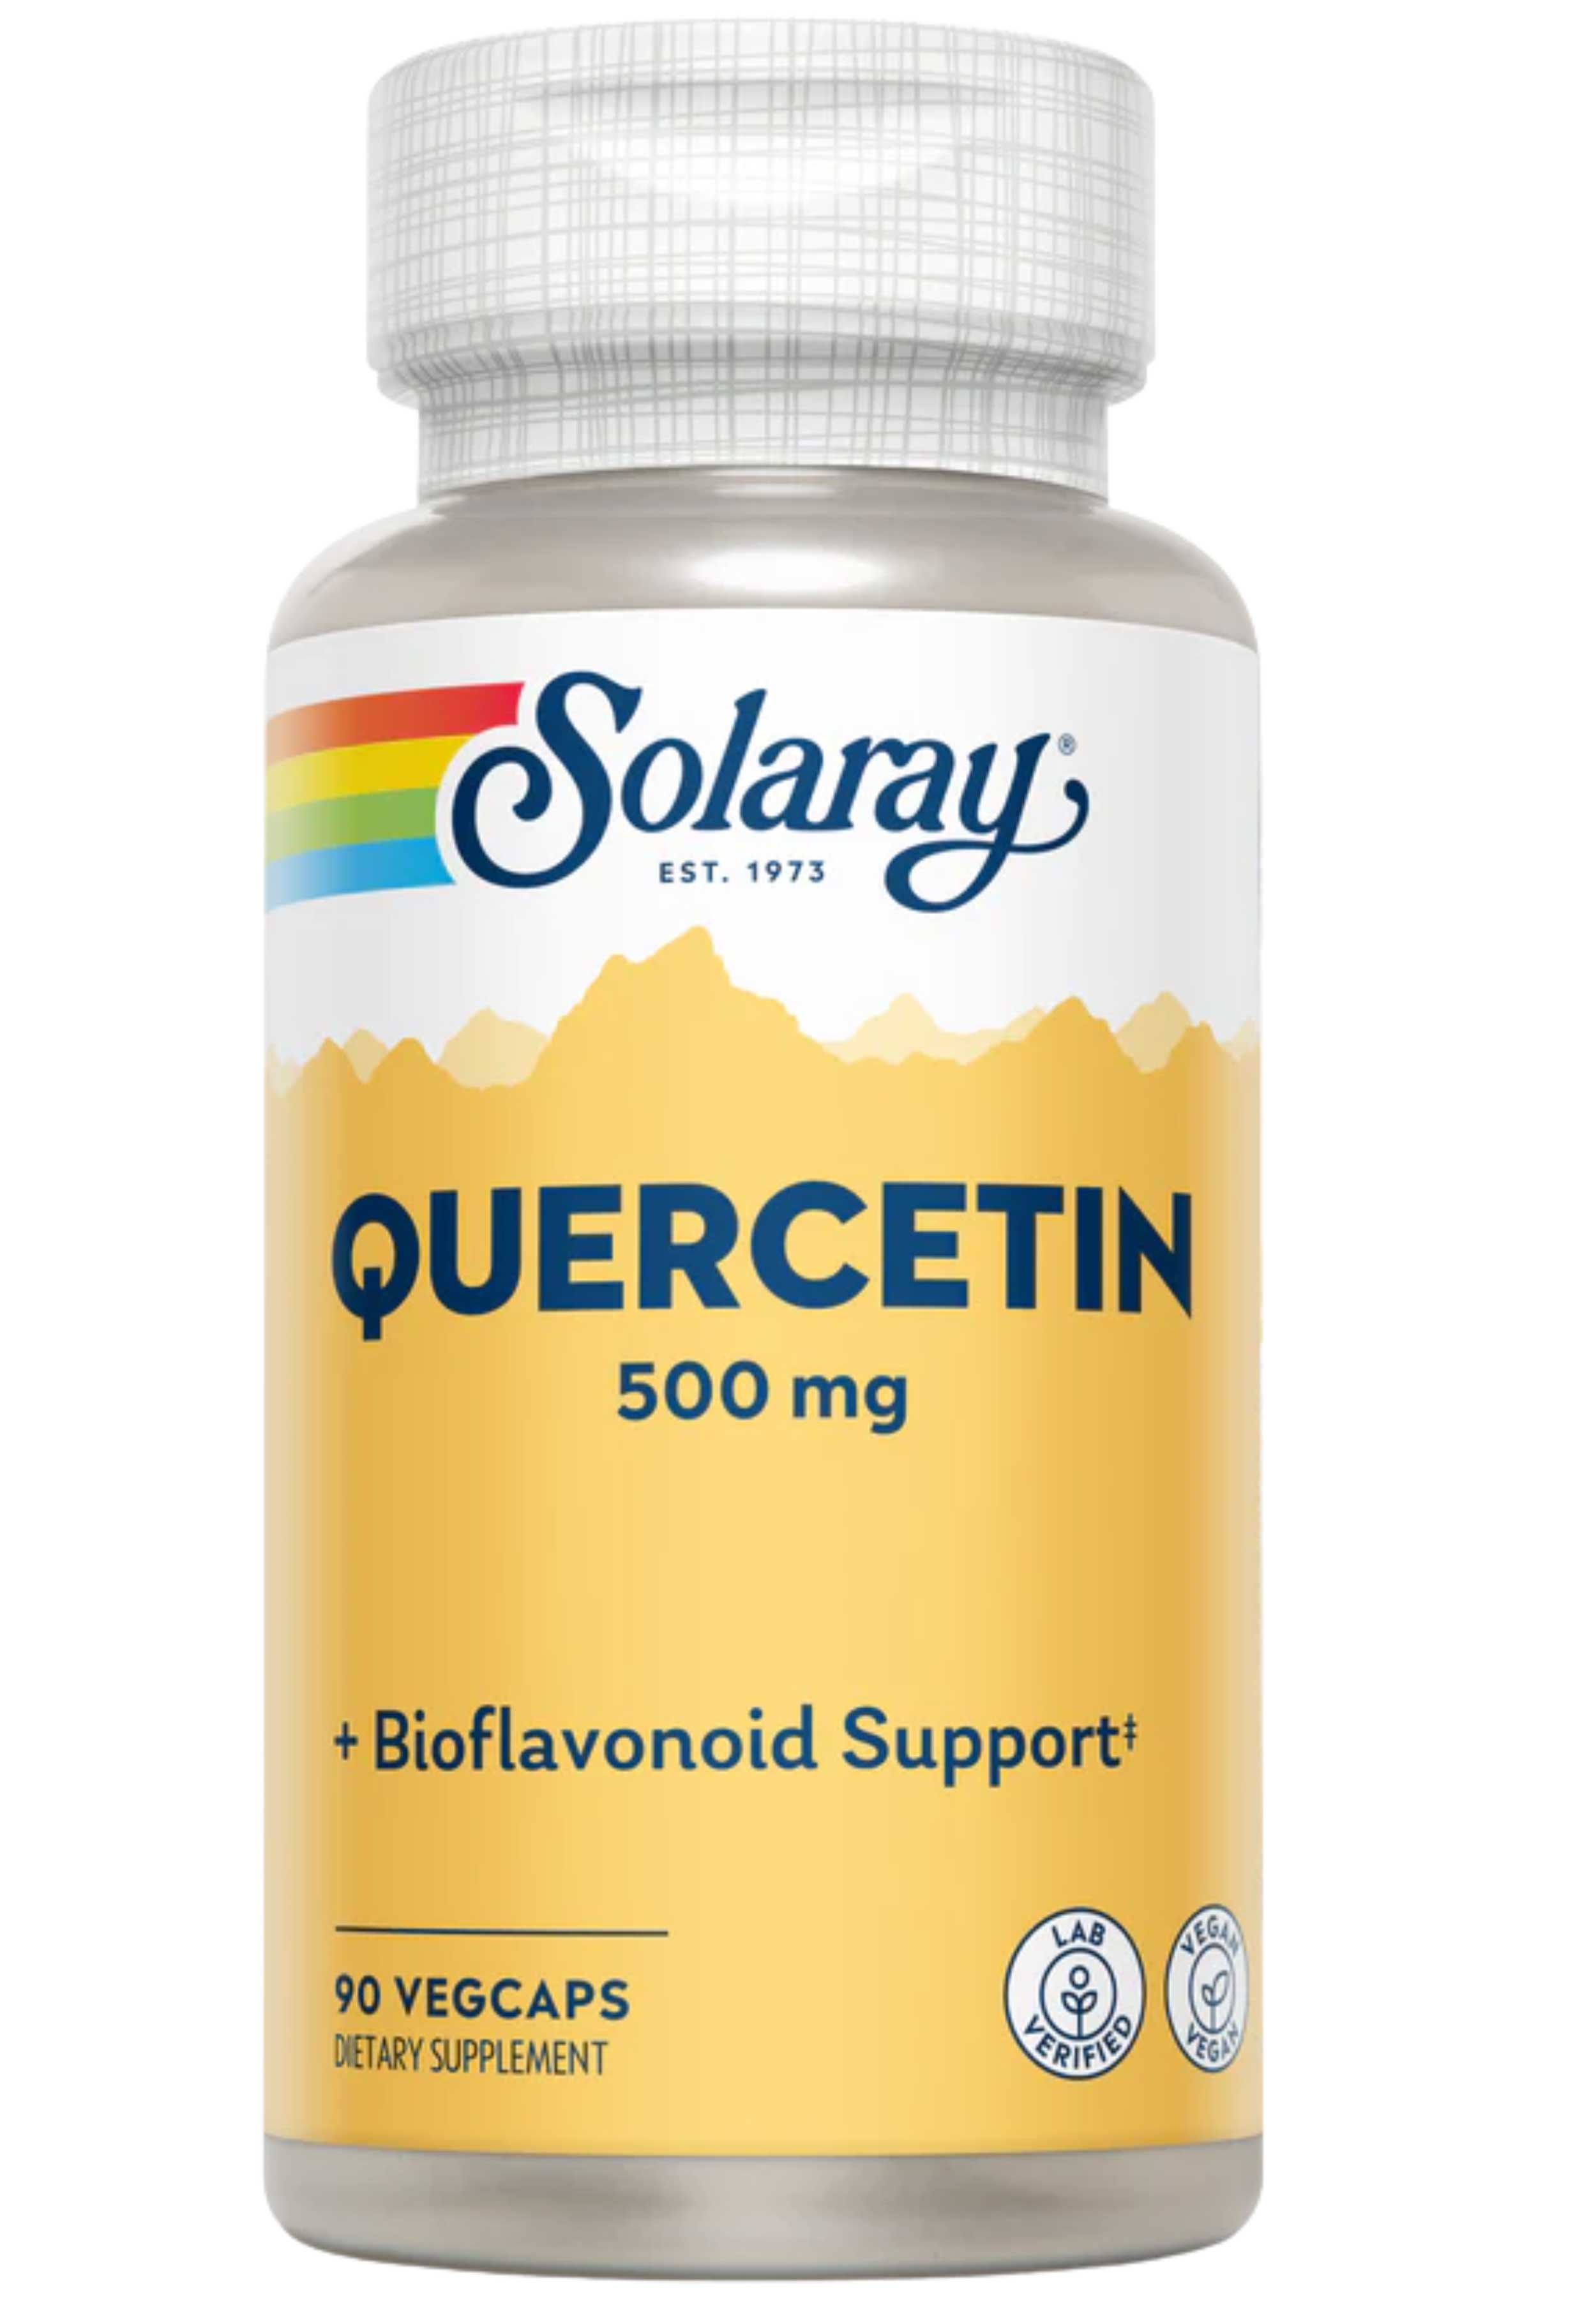 Solaray Quercetin 500 mg